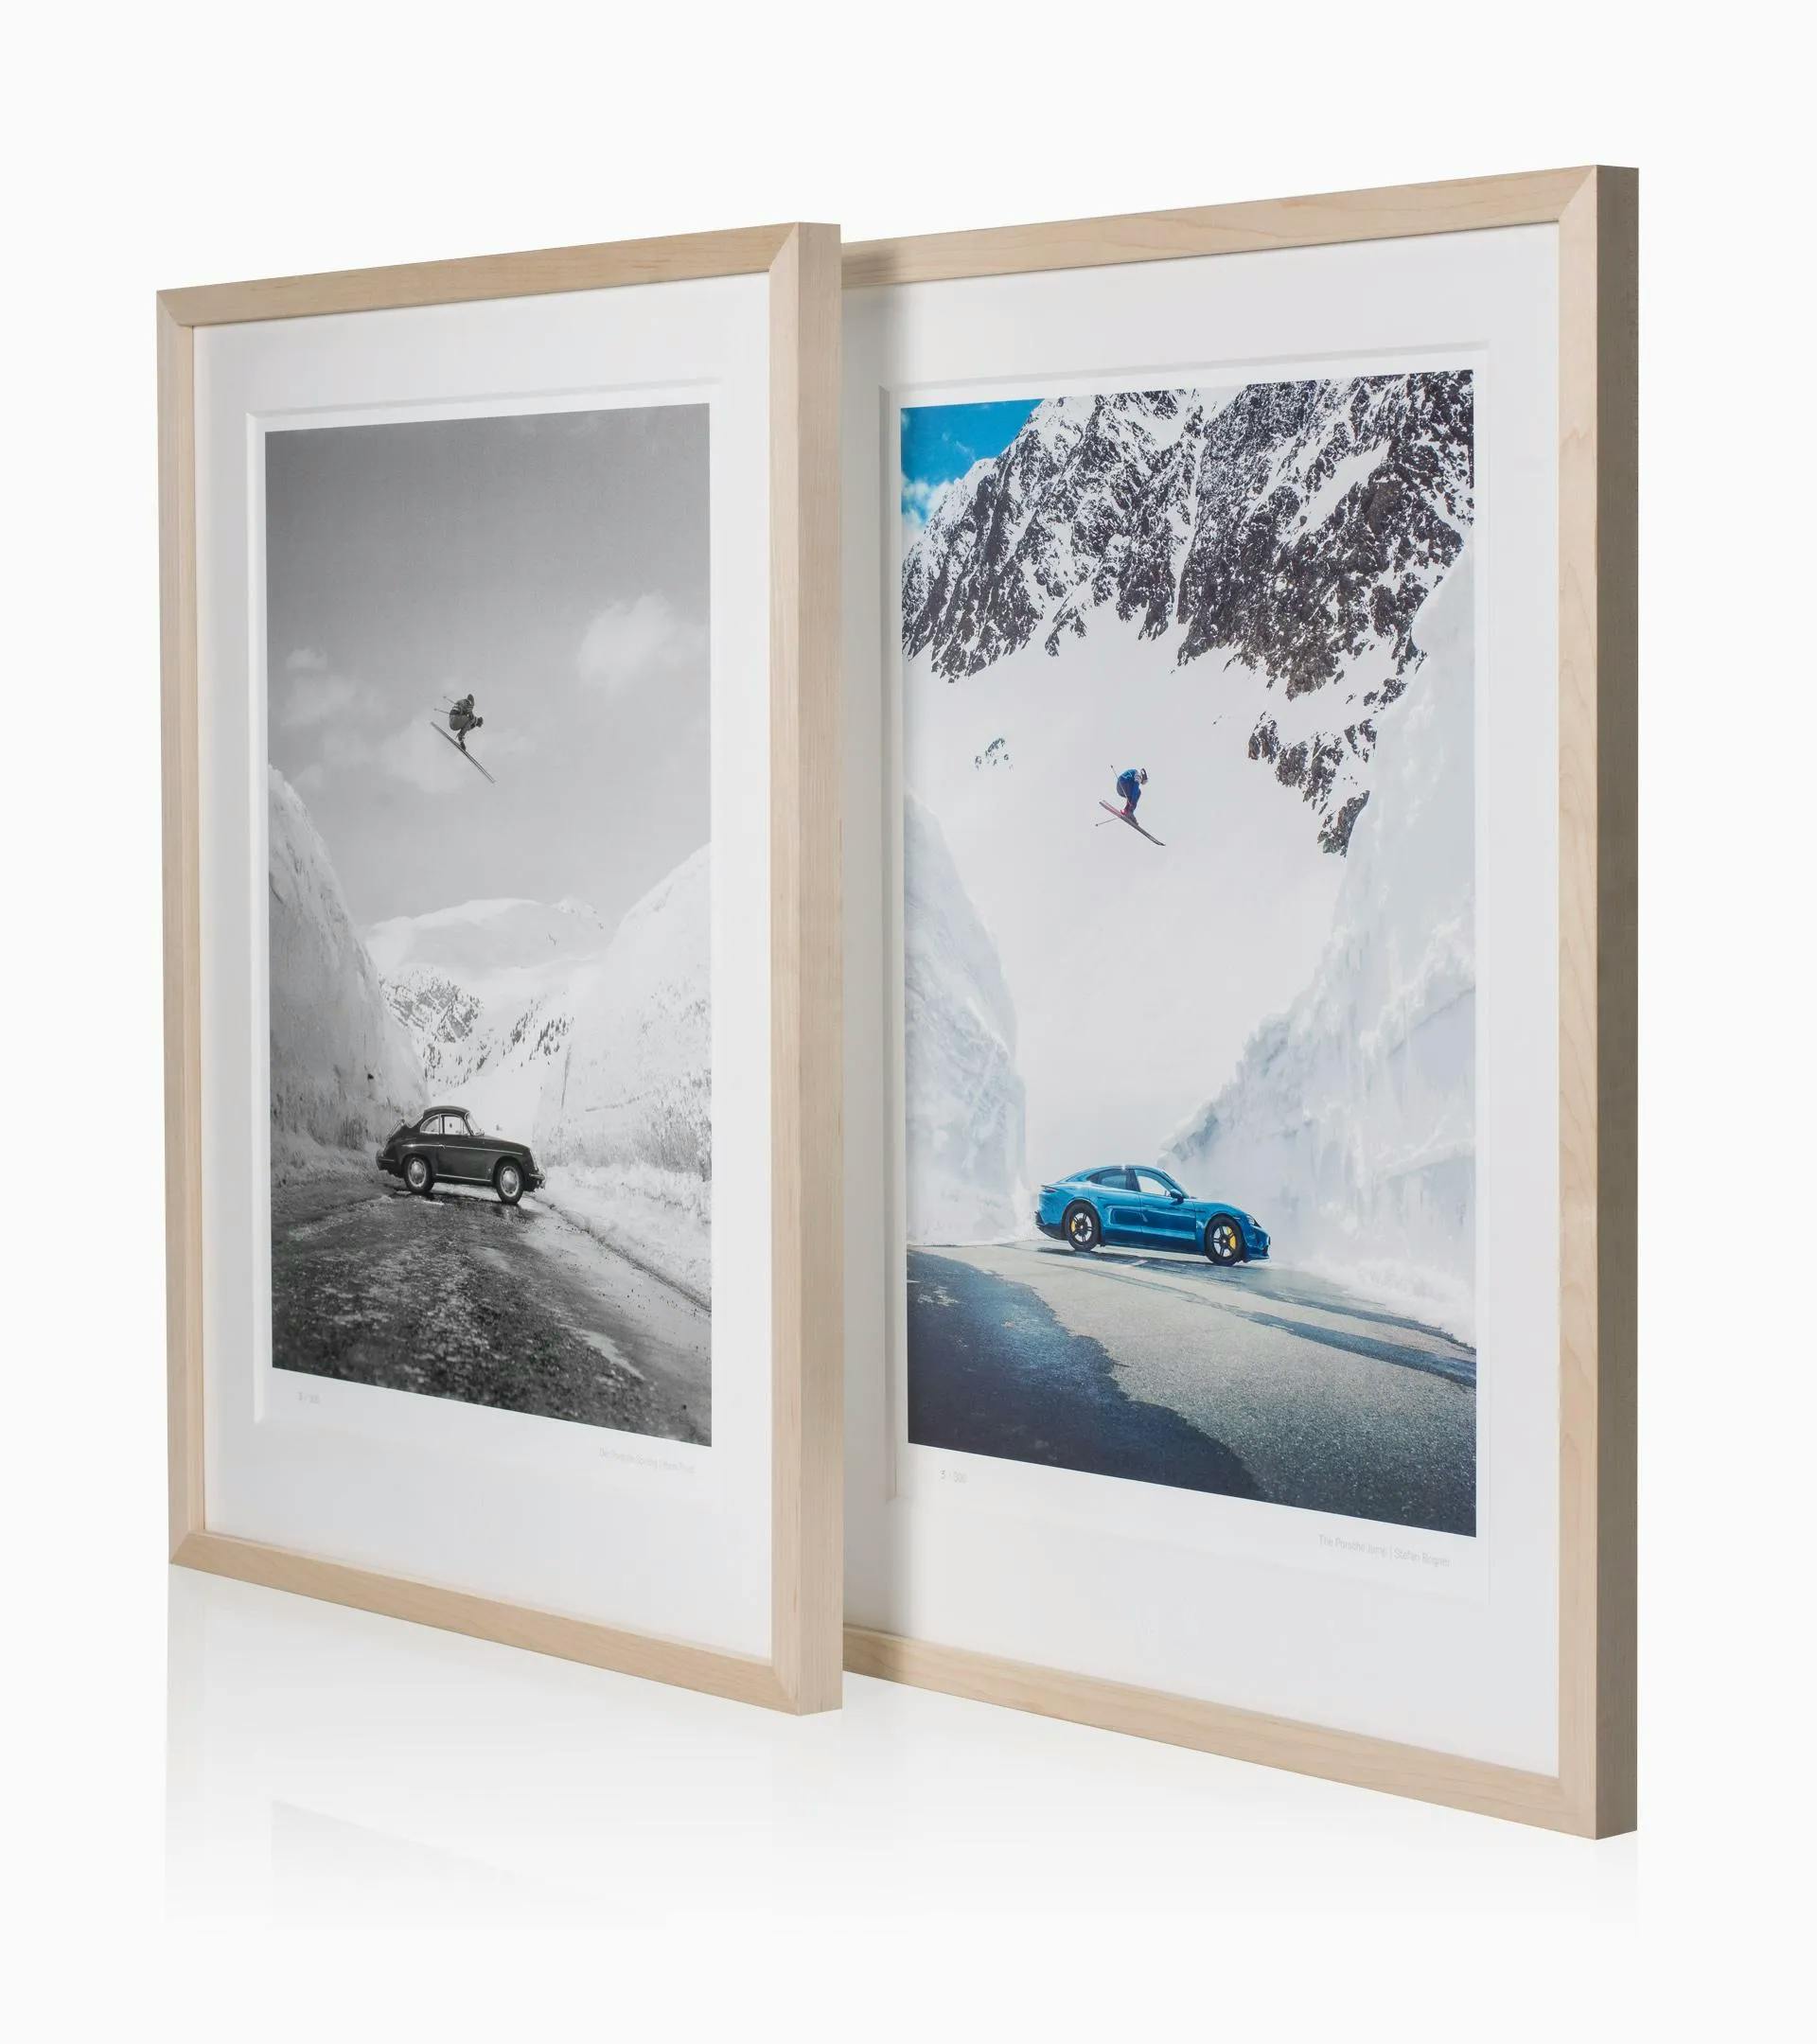 'The Porsche Jump' image set